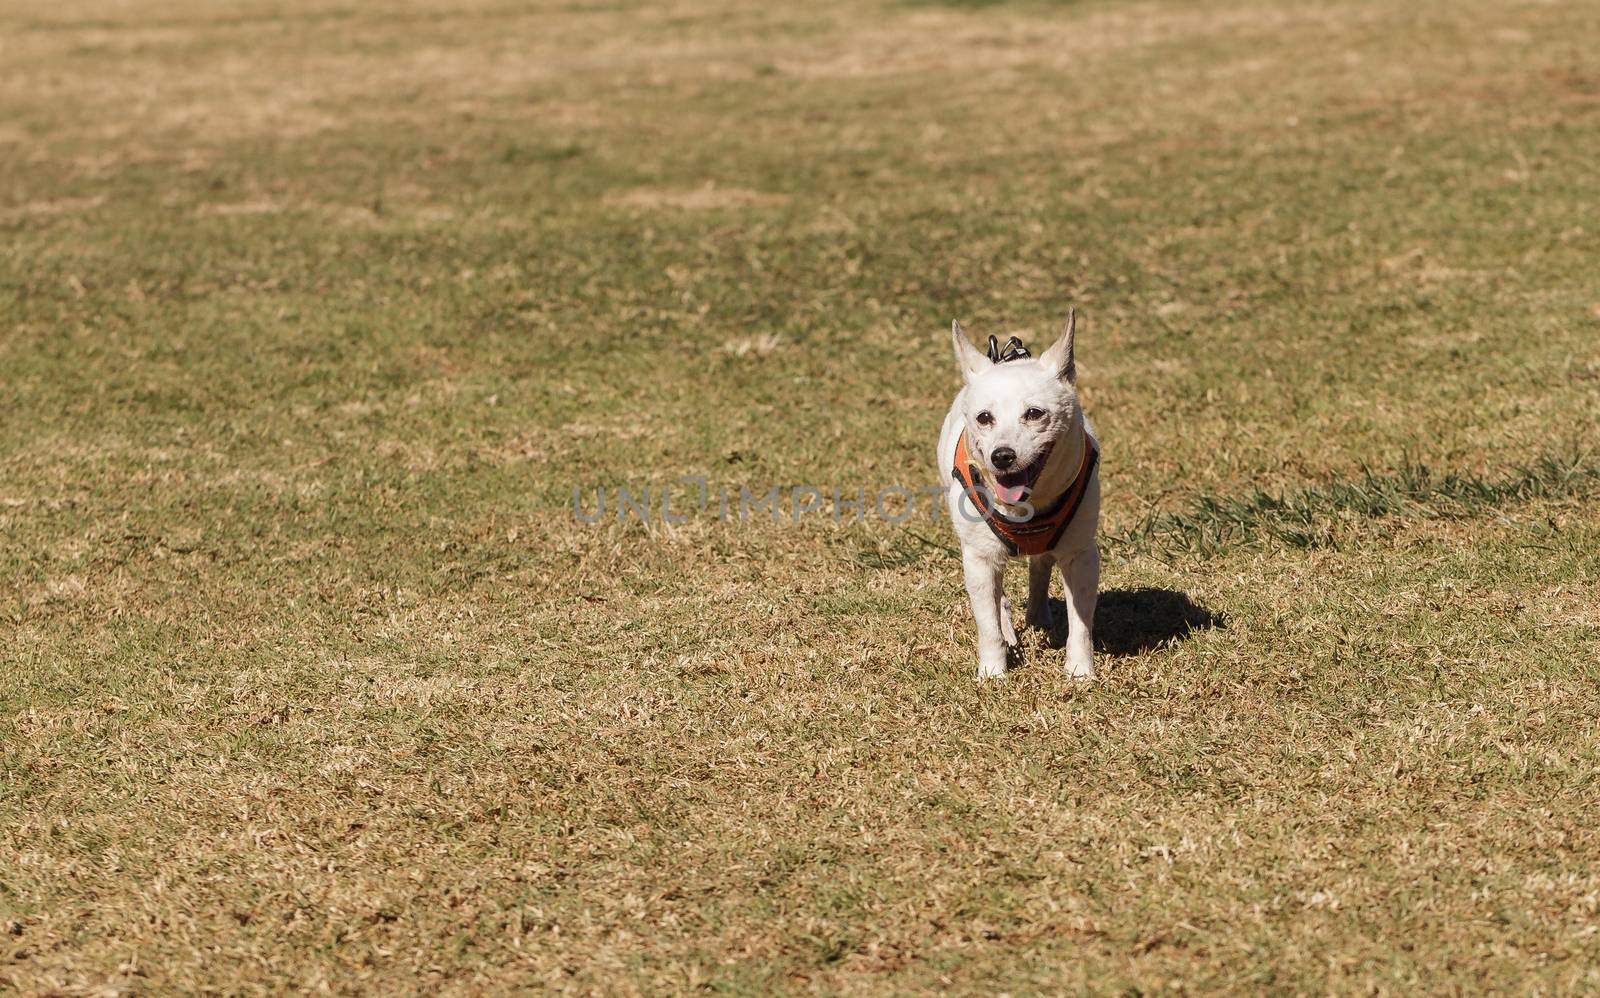 Elderly Jack Russell dog walking at a dog park in summer